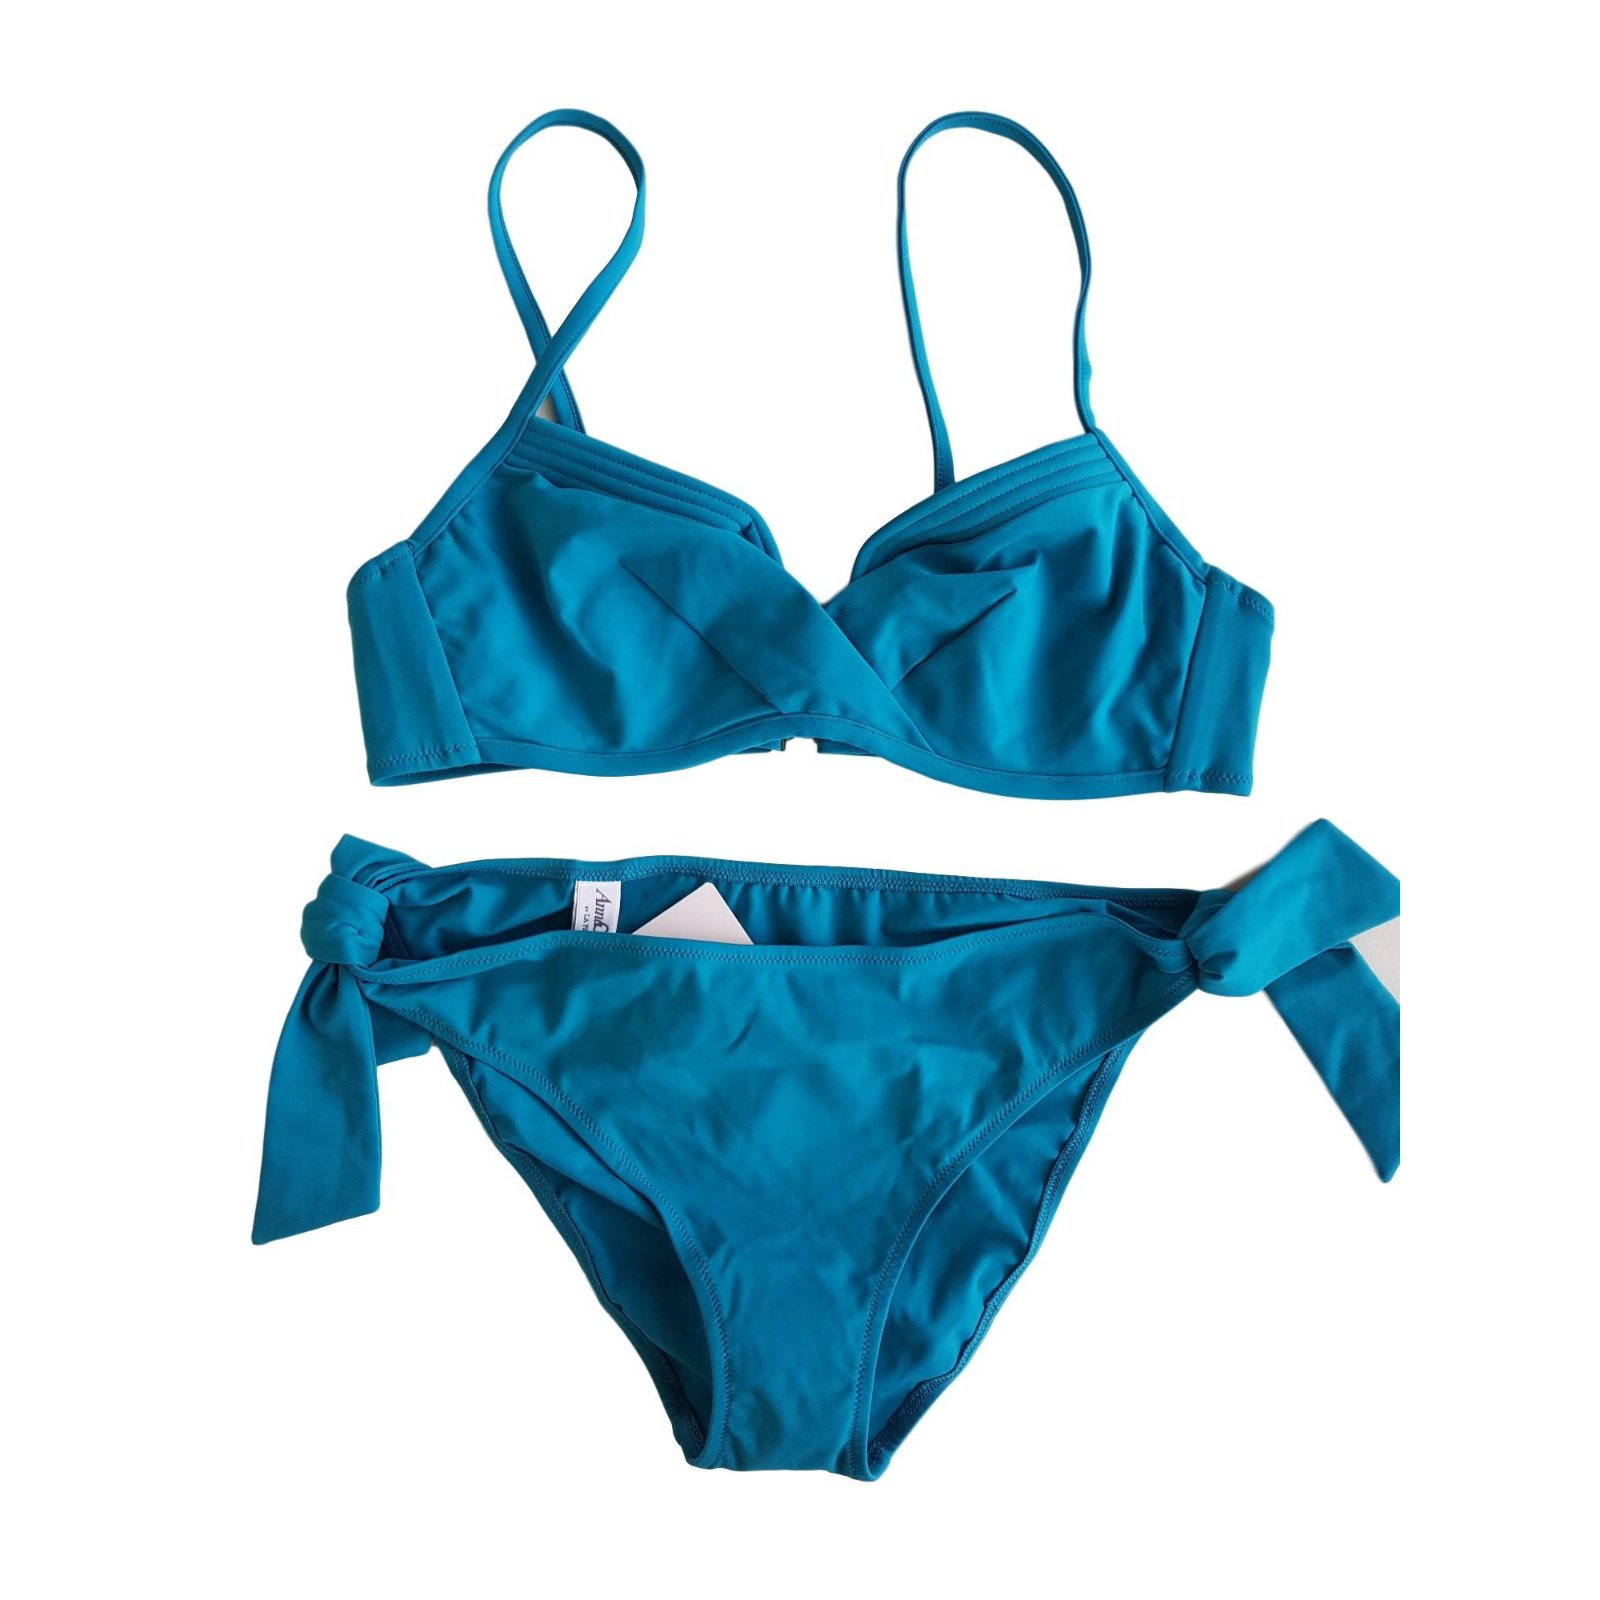 https://cdn1.jolicloset.com/imgr/full/2018/06/71802-1/la-perla-blue-polyamide-swimwear.jpg